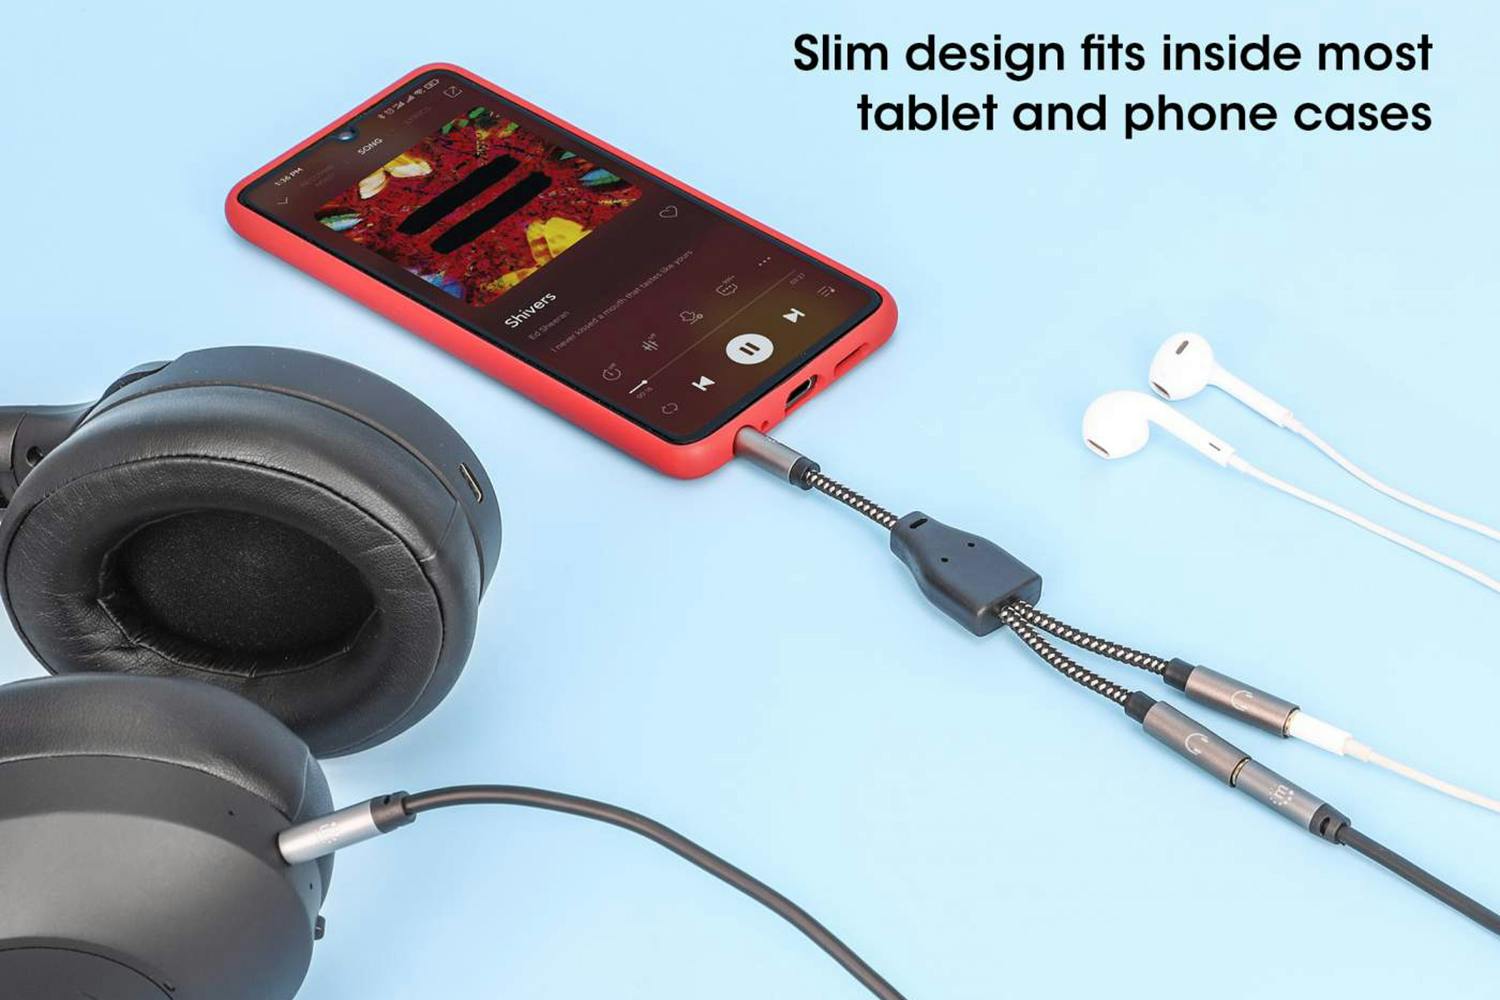 Manhattan Stereo Audio Aux Headphone Y-Splitter Cable | Black/Silver